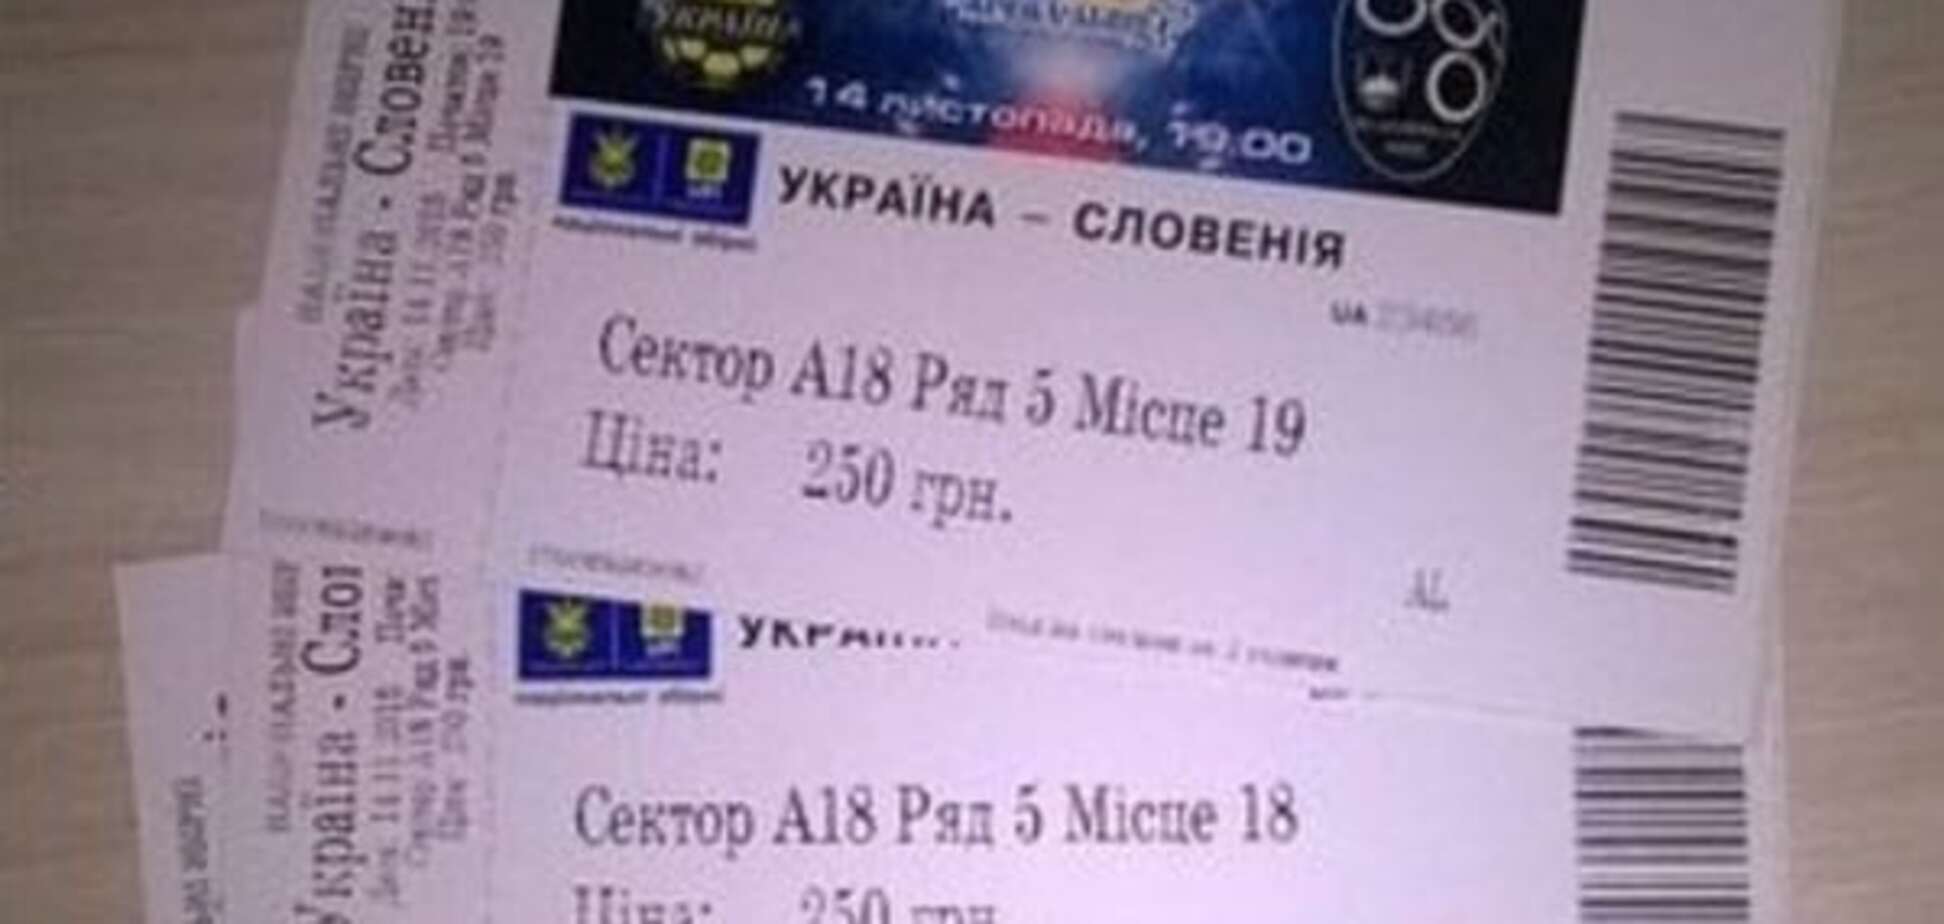 Во Львове прекращена продажа билетов на матч Украина - Словения